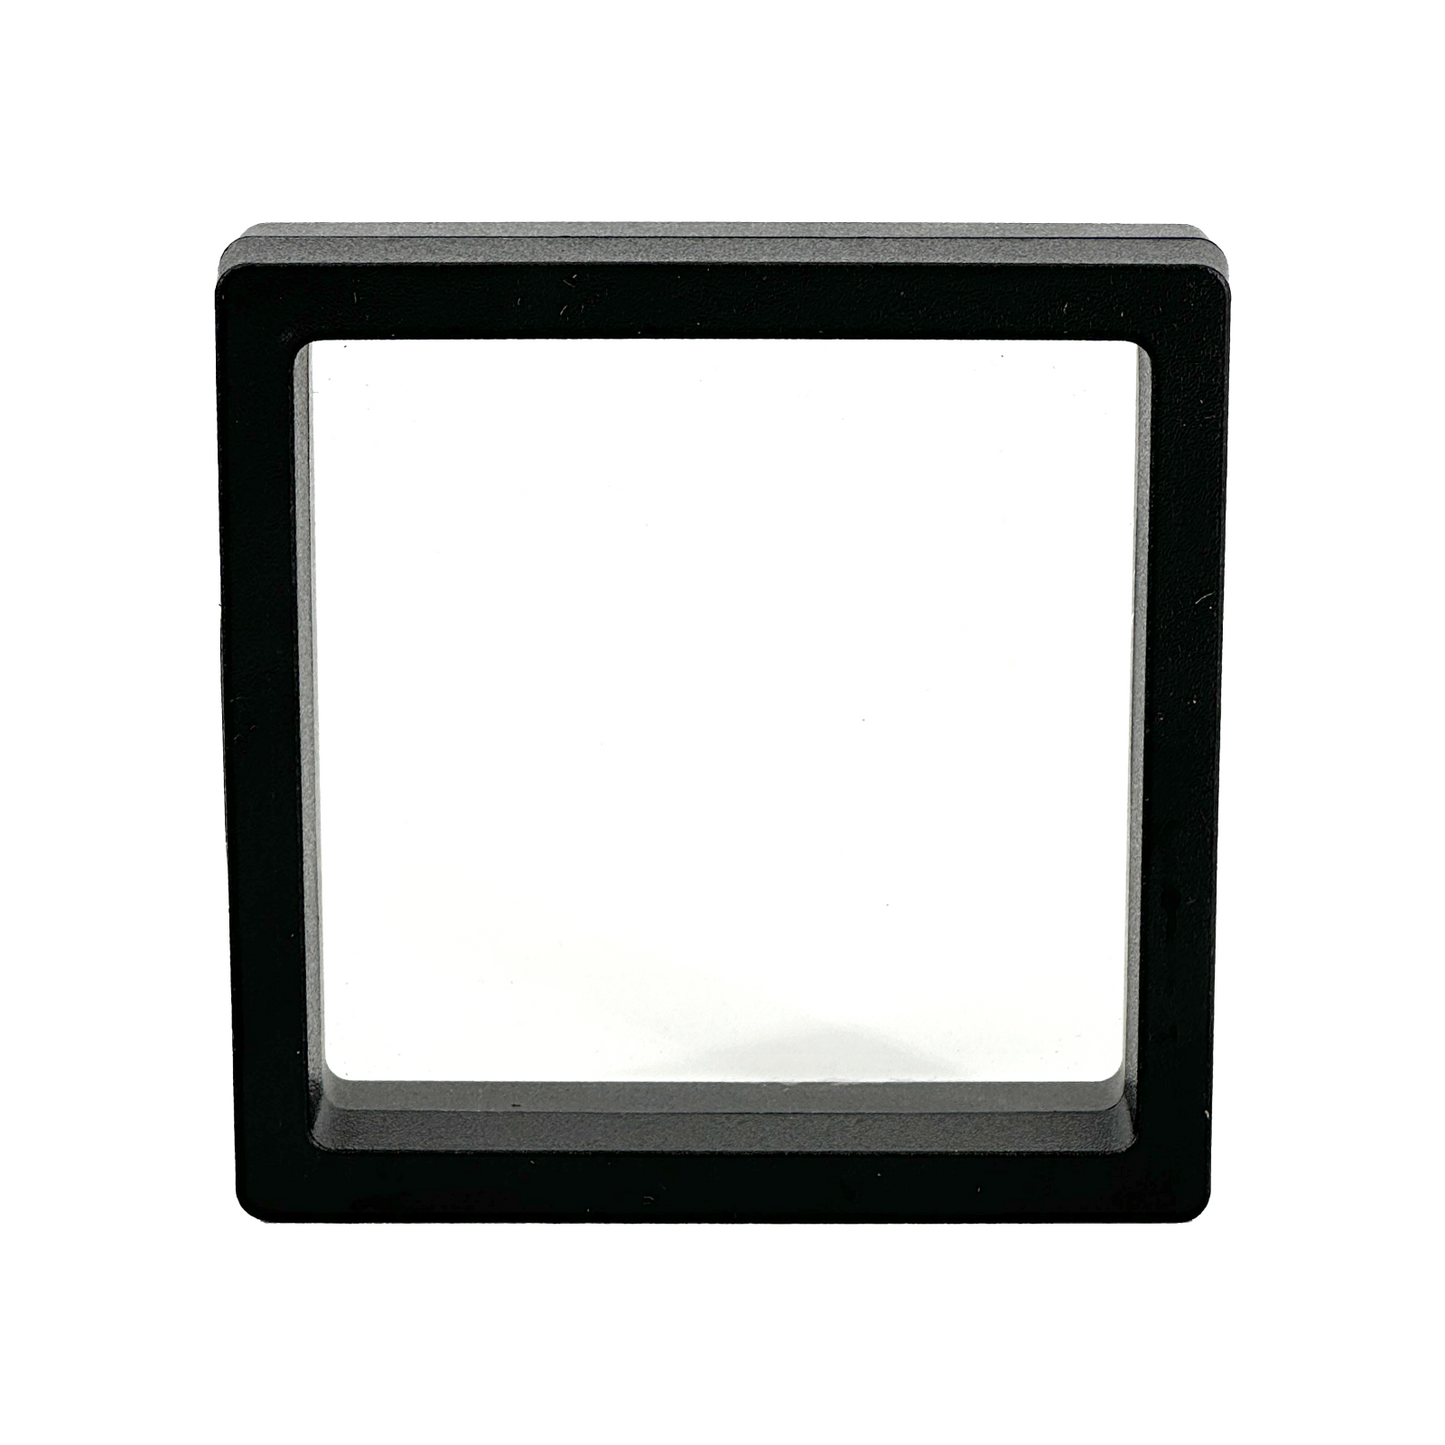 3 1/2" x 3 1/2" Black Floating Frame Jewelry Display Case